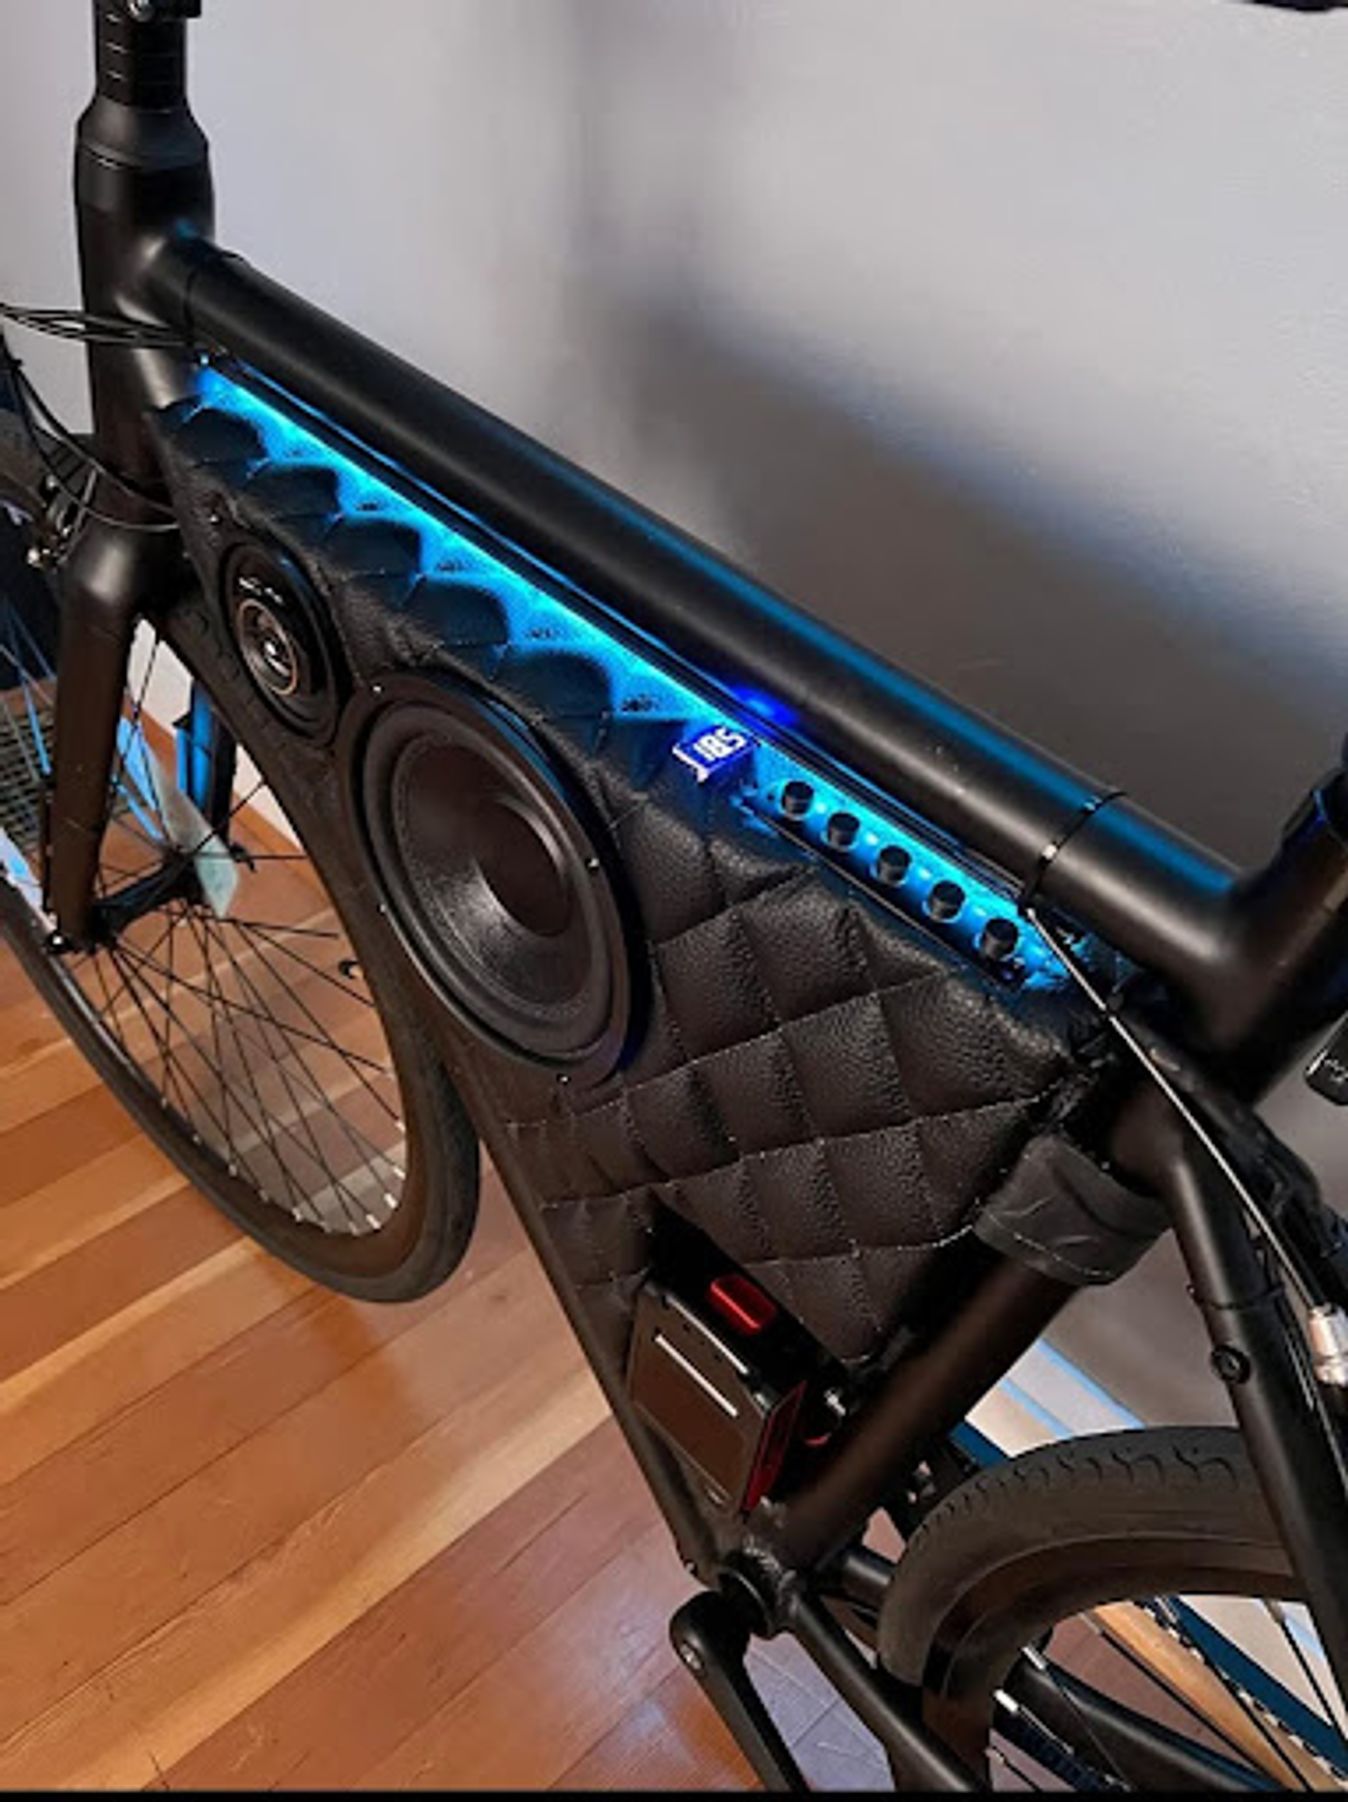 stereo speaker system on a bike